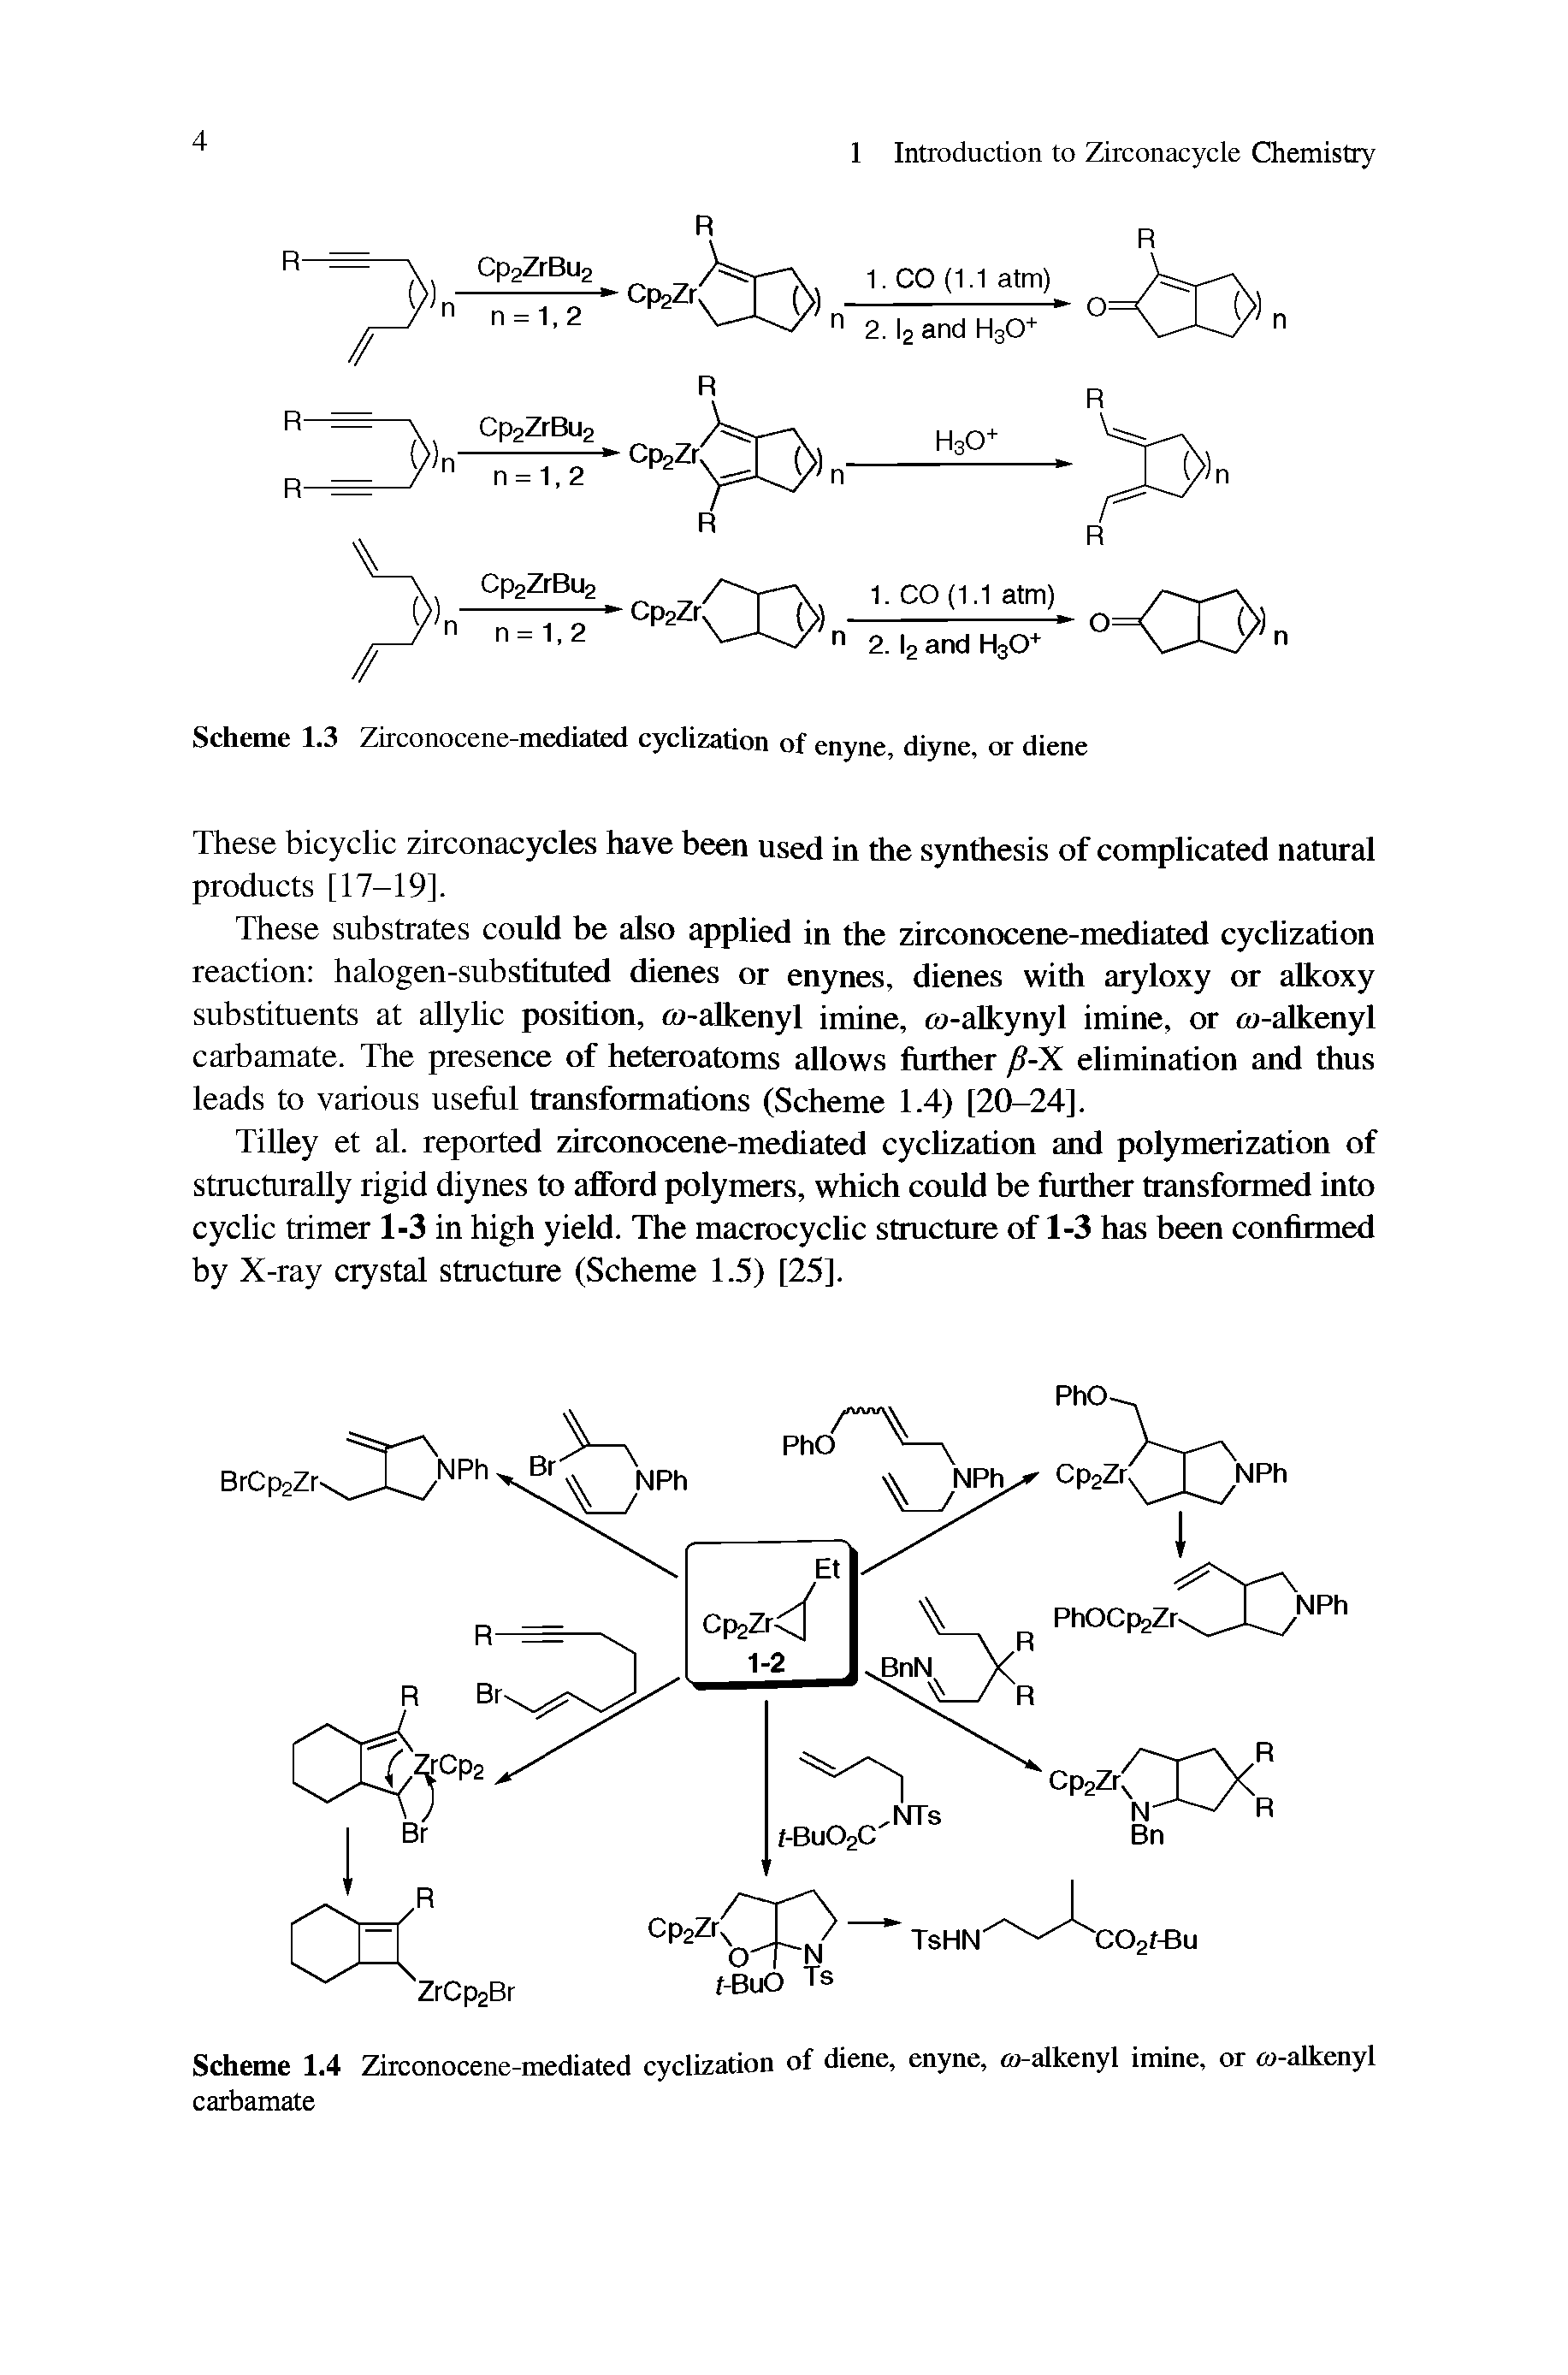 Scheme 1.4 Zirconocene-mediated cyclization of diene, enyne, < -alkenyl imine, or <o-alkenvl carbamate...